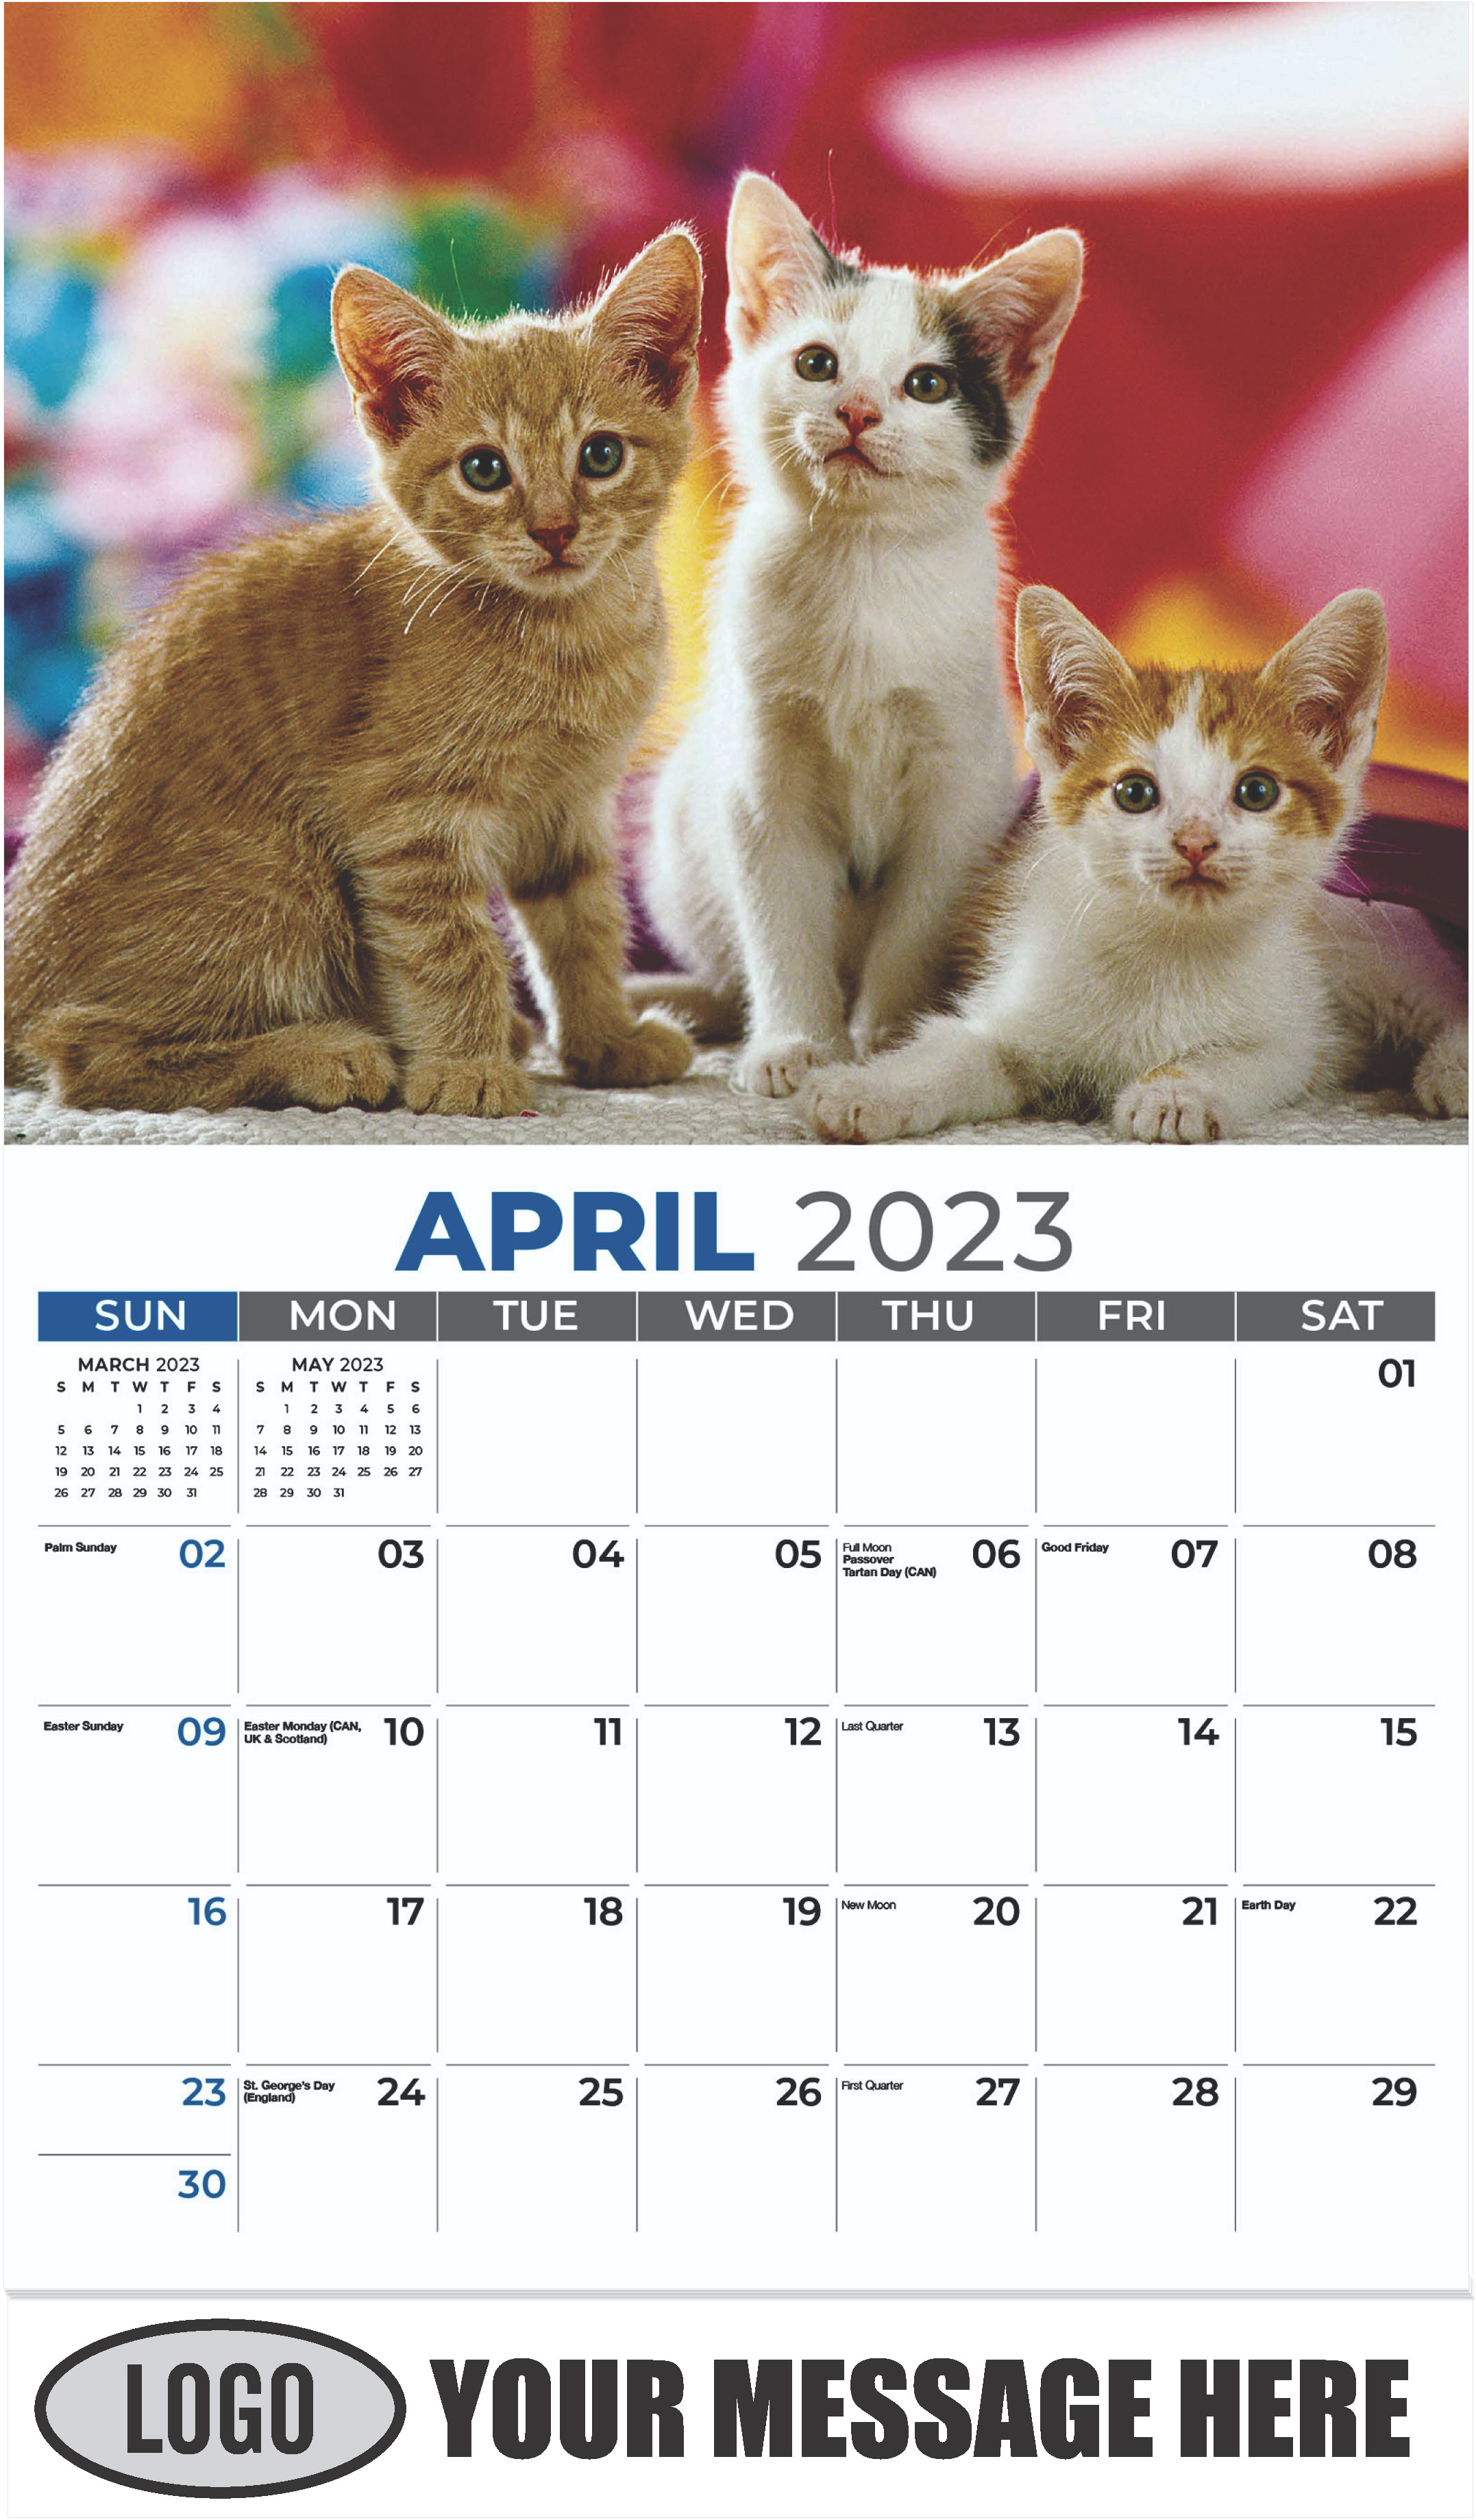 Domestic Cat - April - Kittens 2023 Promotional Calendar